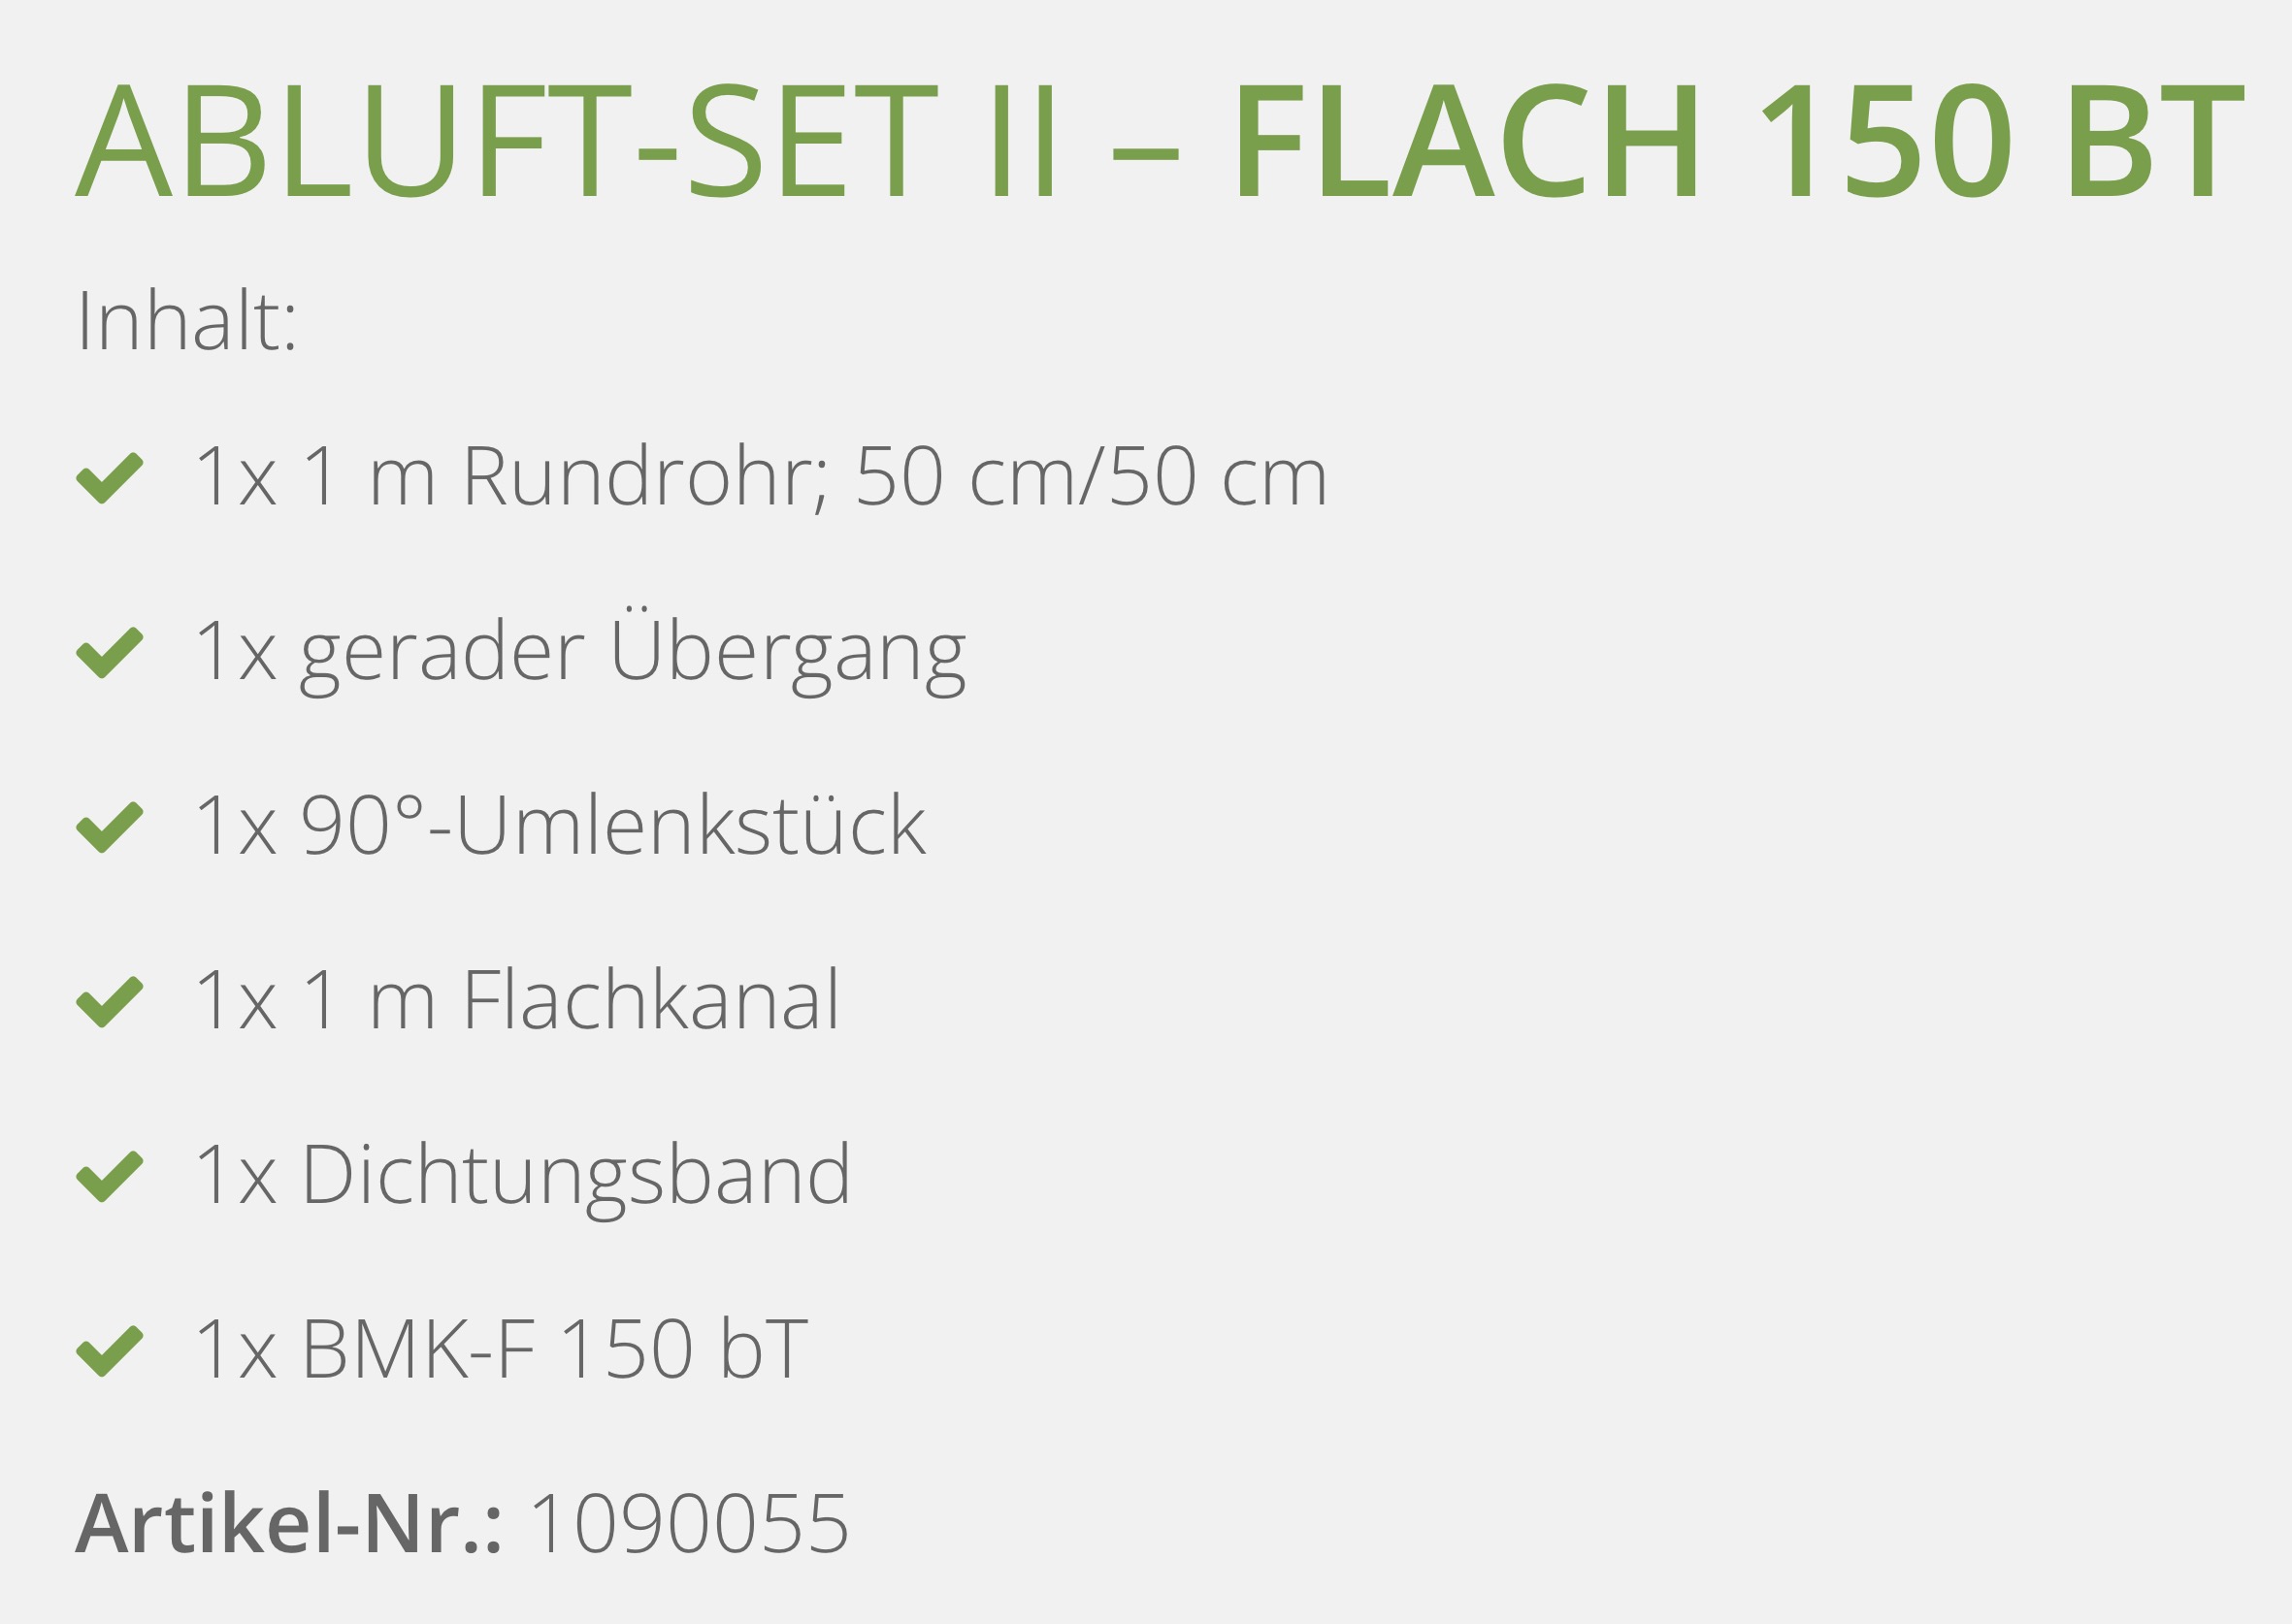 Berbel Abluftset II Flach 150 bT 1090055